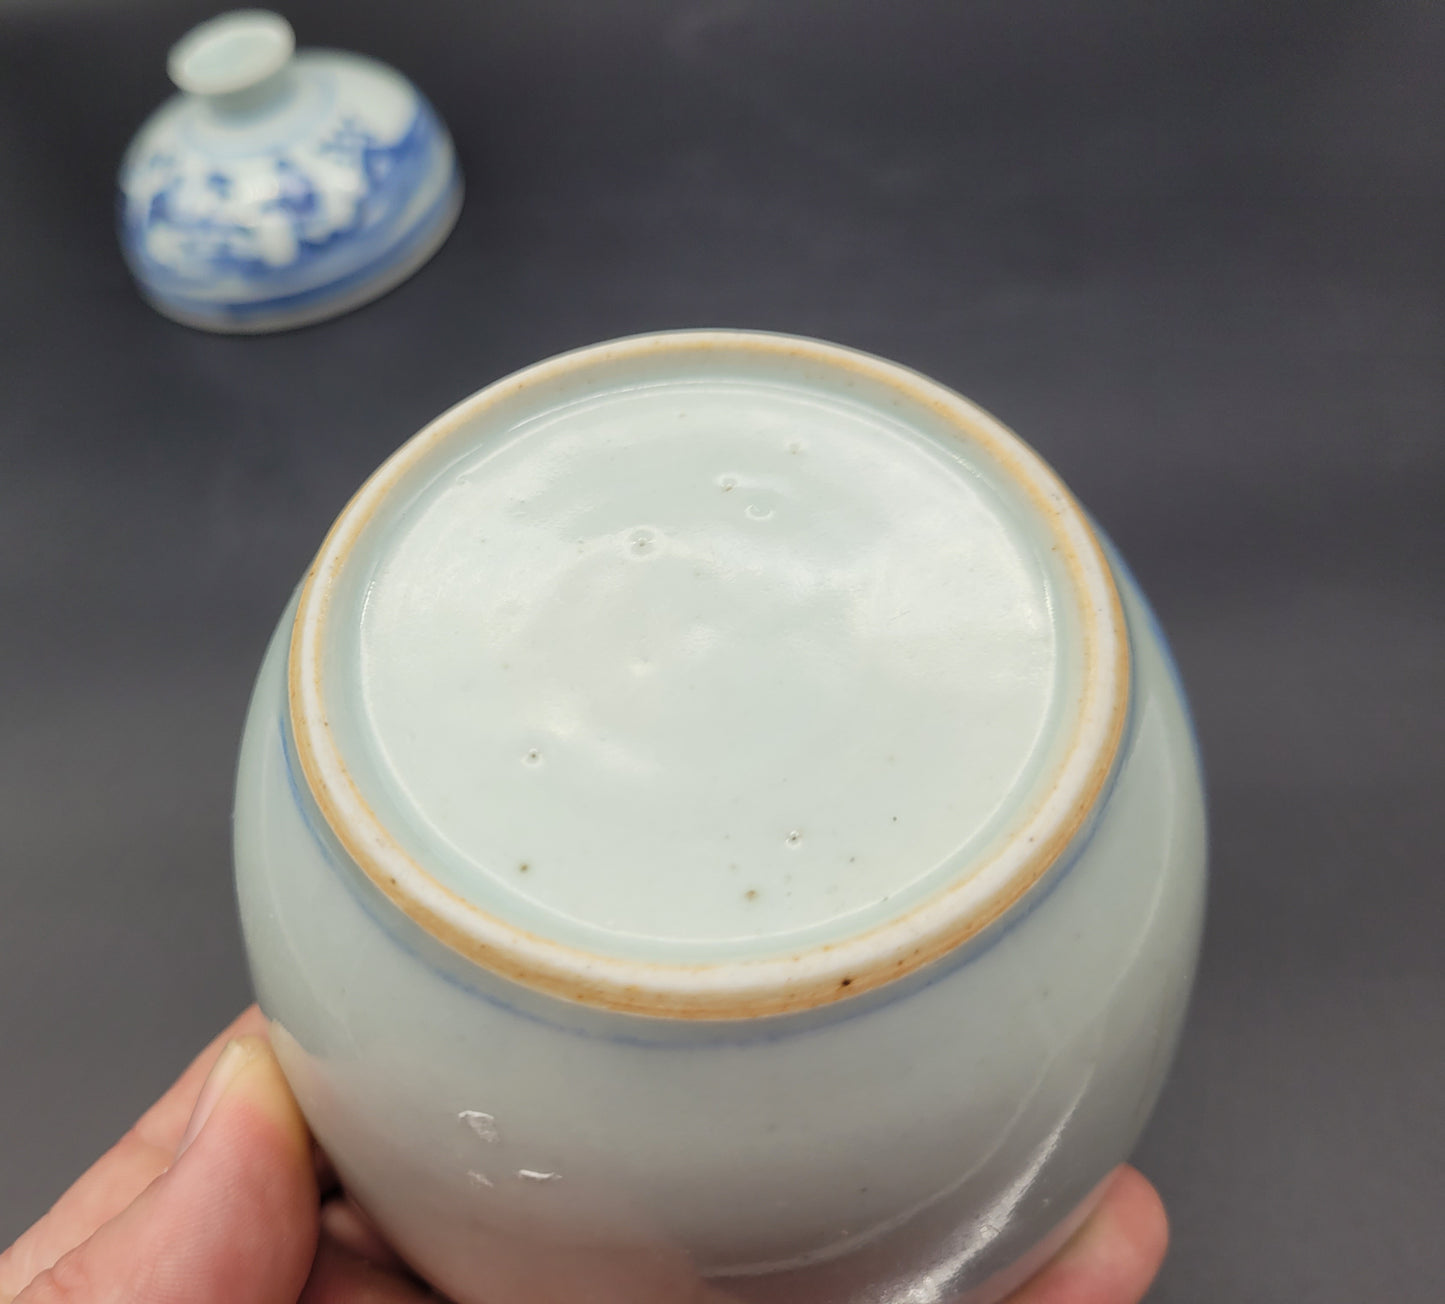 Antique Chinese porcelain lidded jar 19th Century scholars in a landscape